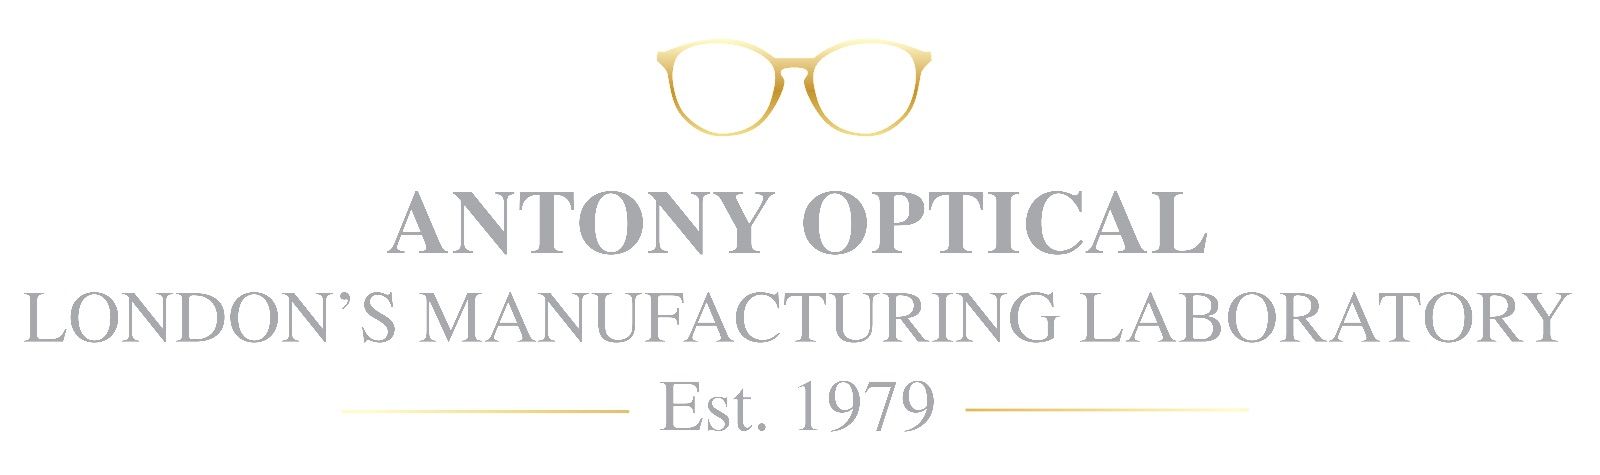 Antony Optical London’s Manurfacturing Laboratory